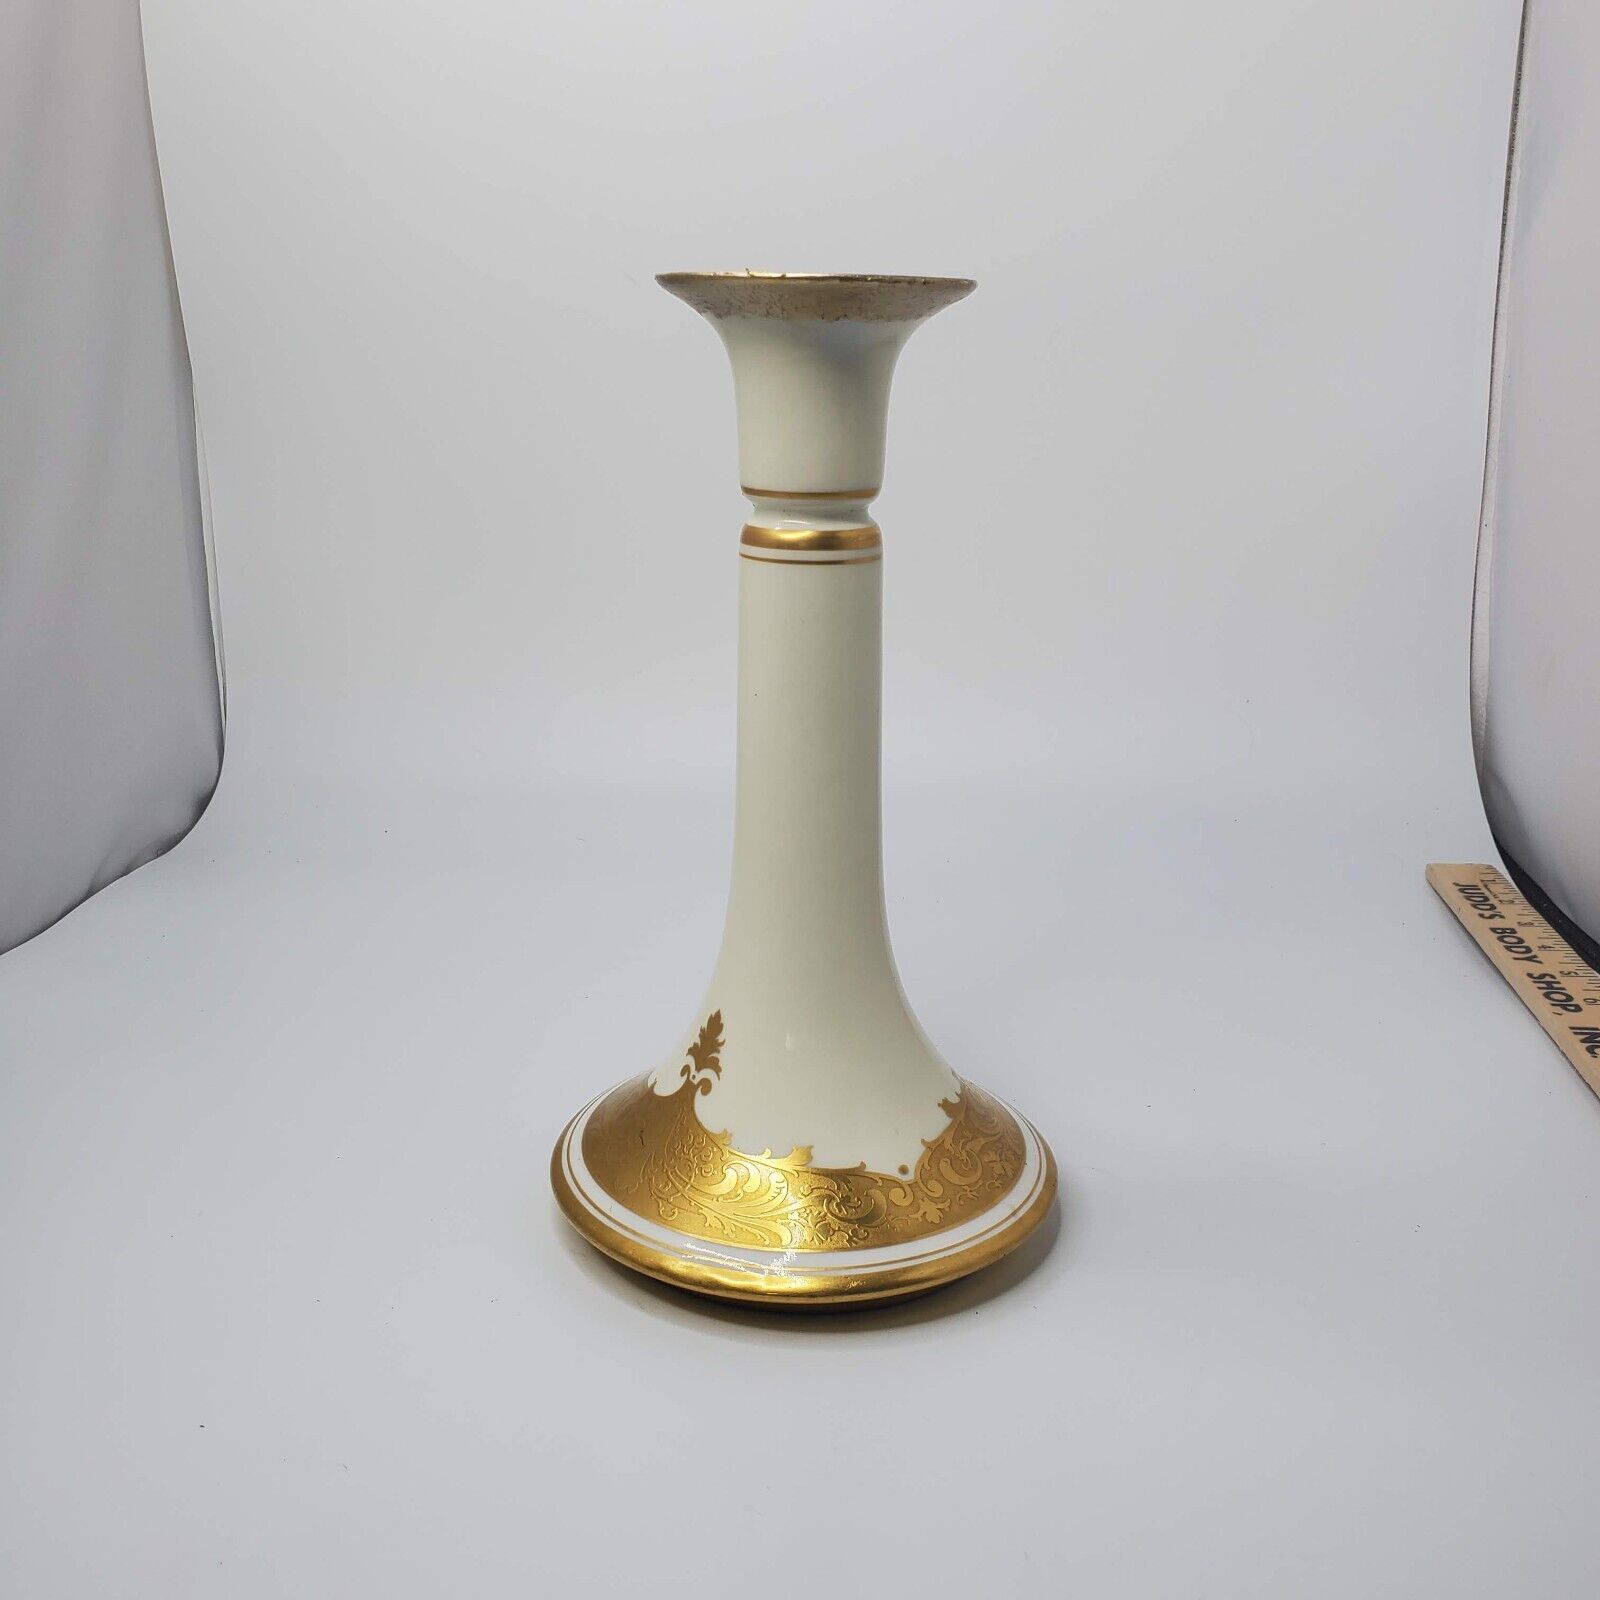 Fraunfelter China Ohio Ivory Porcelain and Gold Large Centerpiece Candlestick